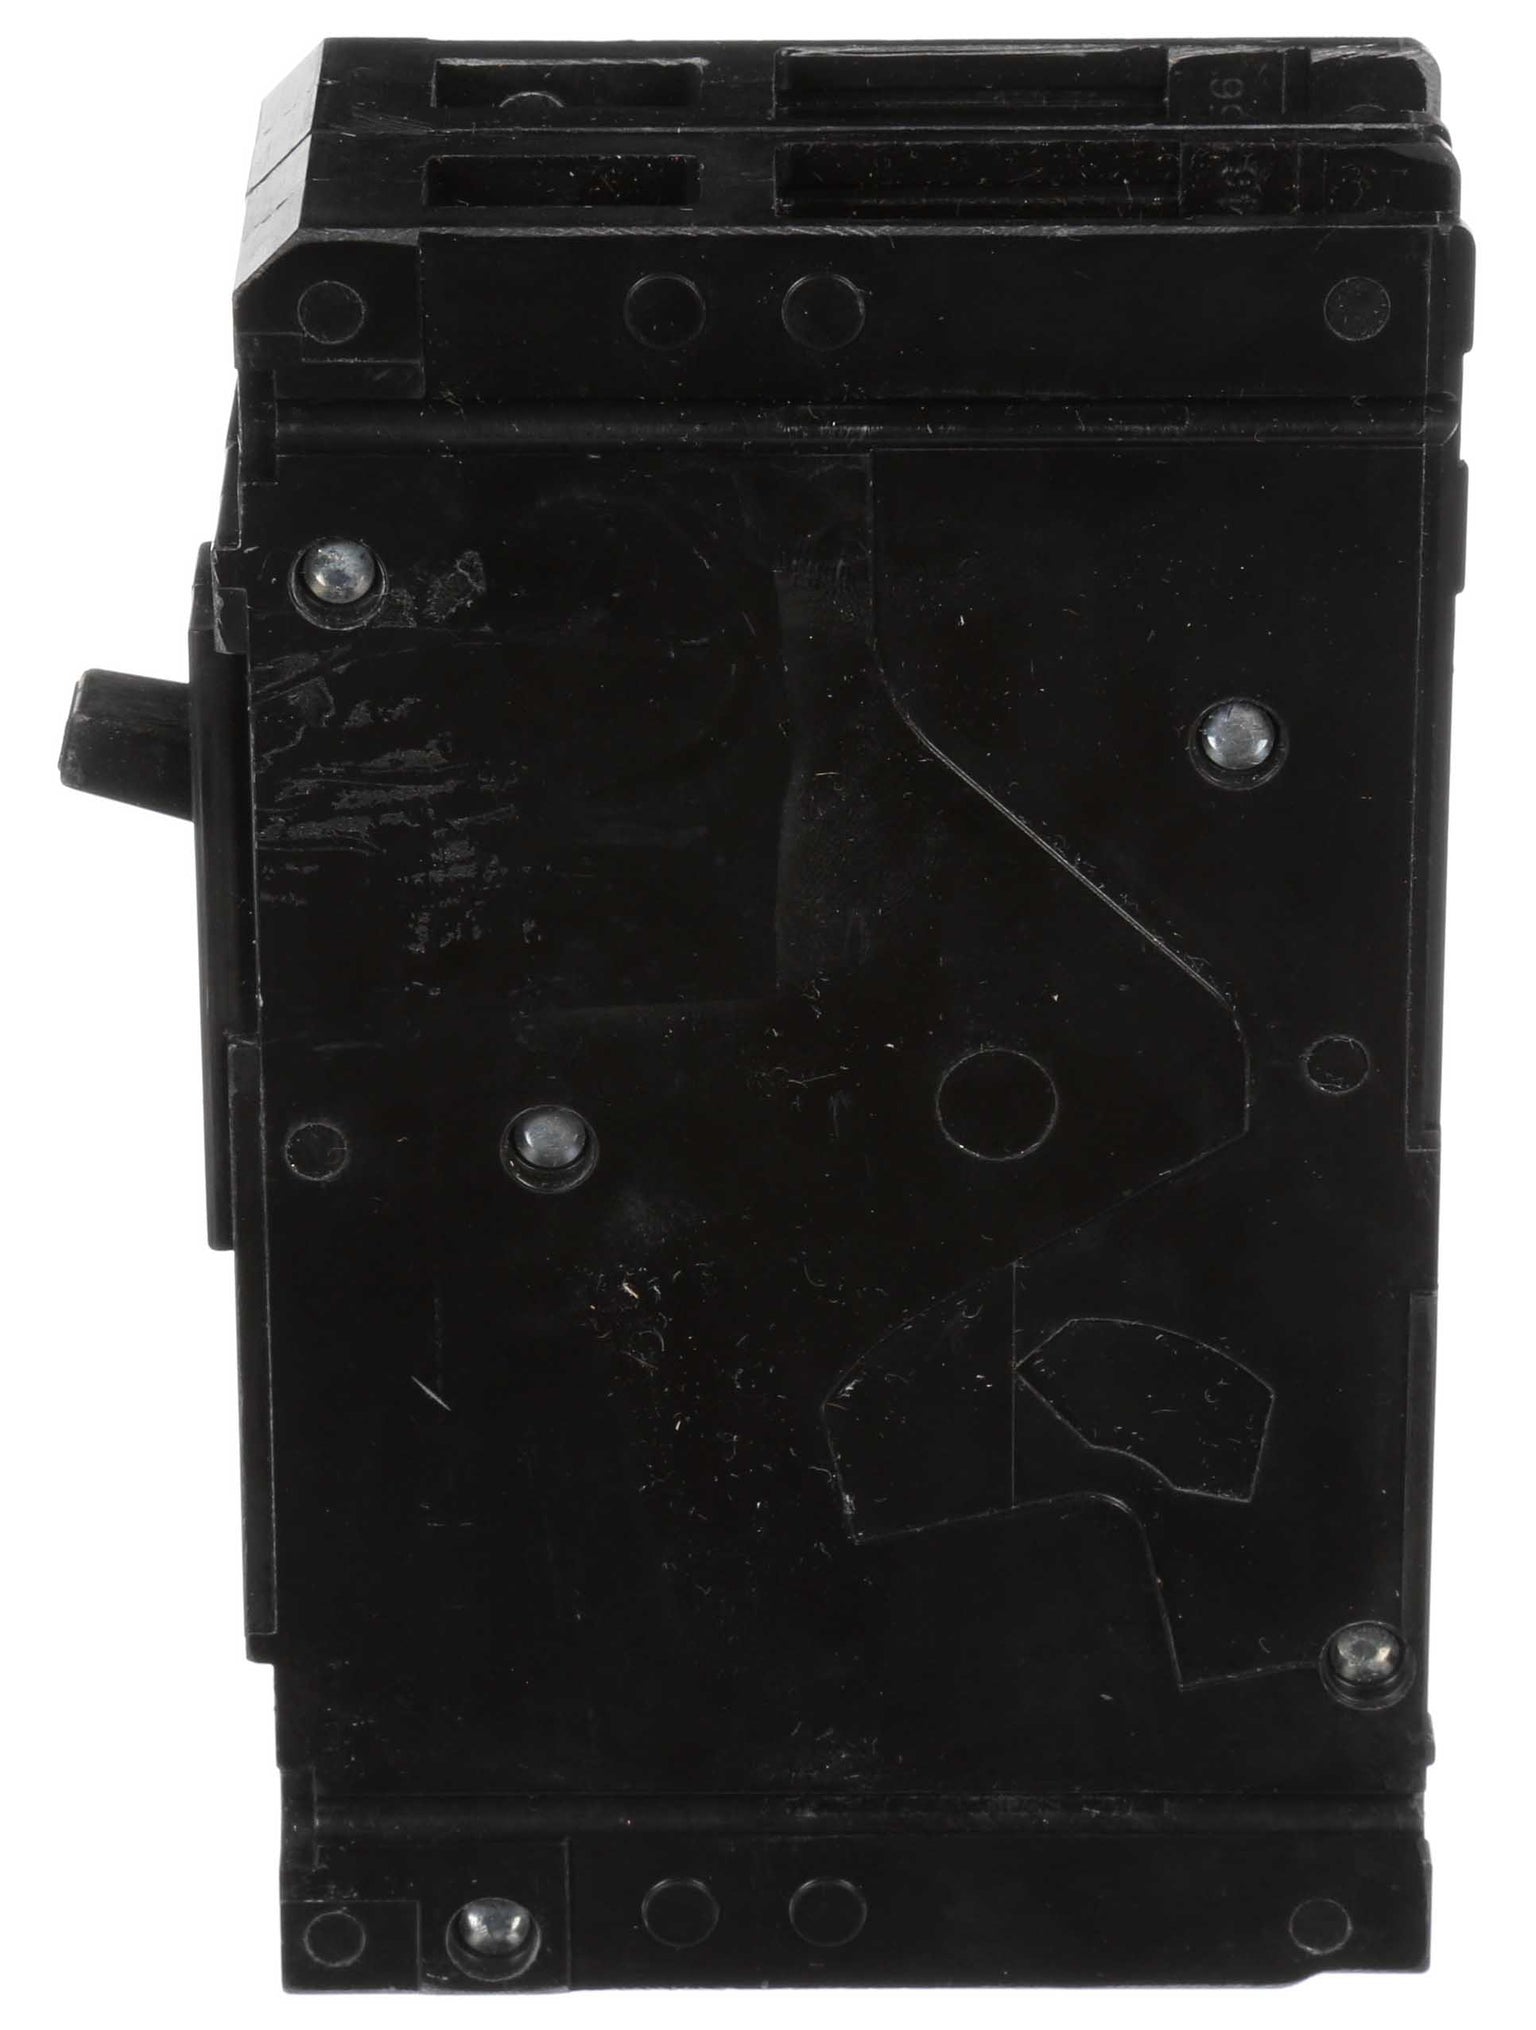 ED22B015 - Siemens - Molded Case Circuit Breaker